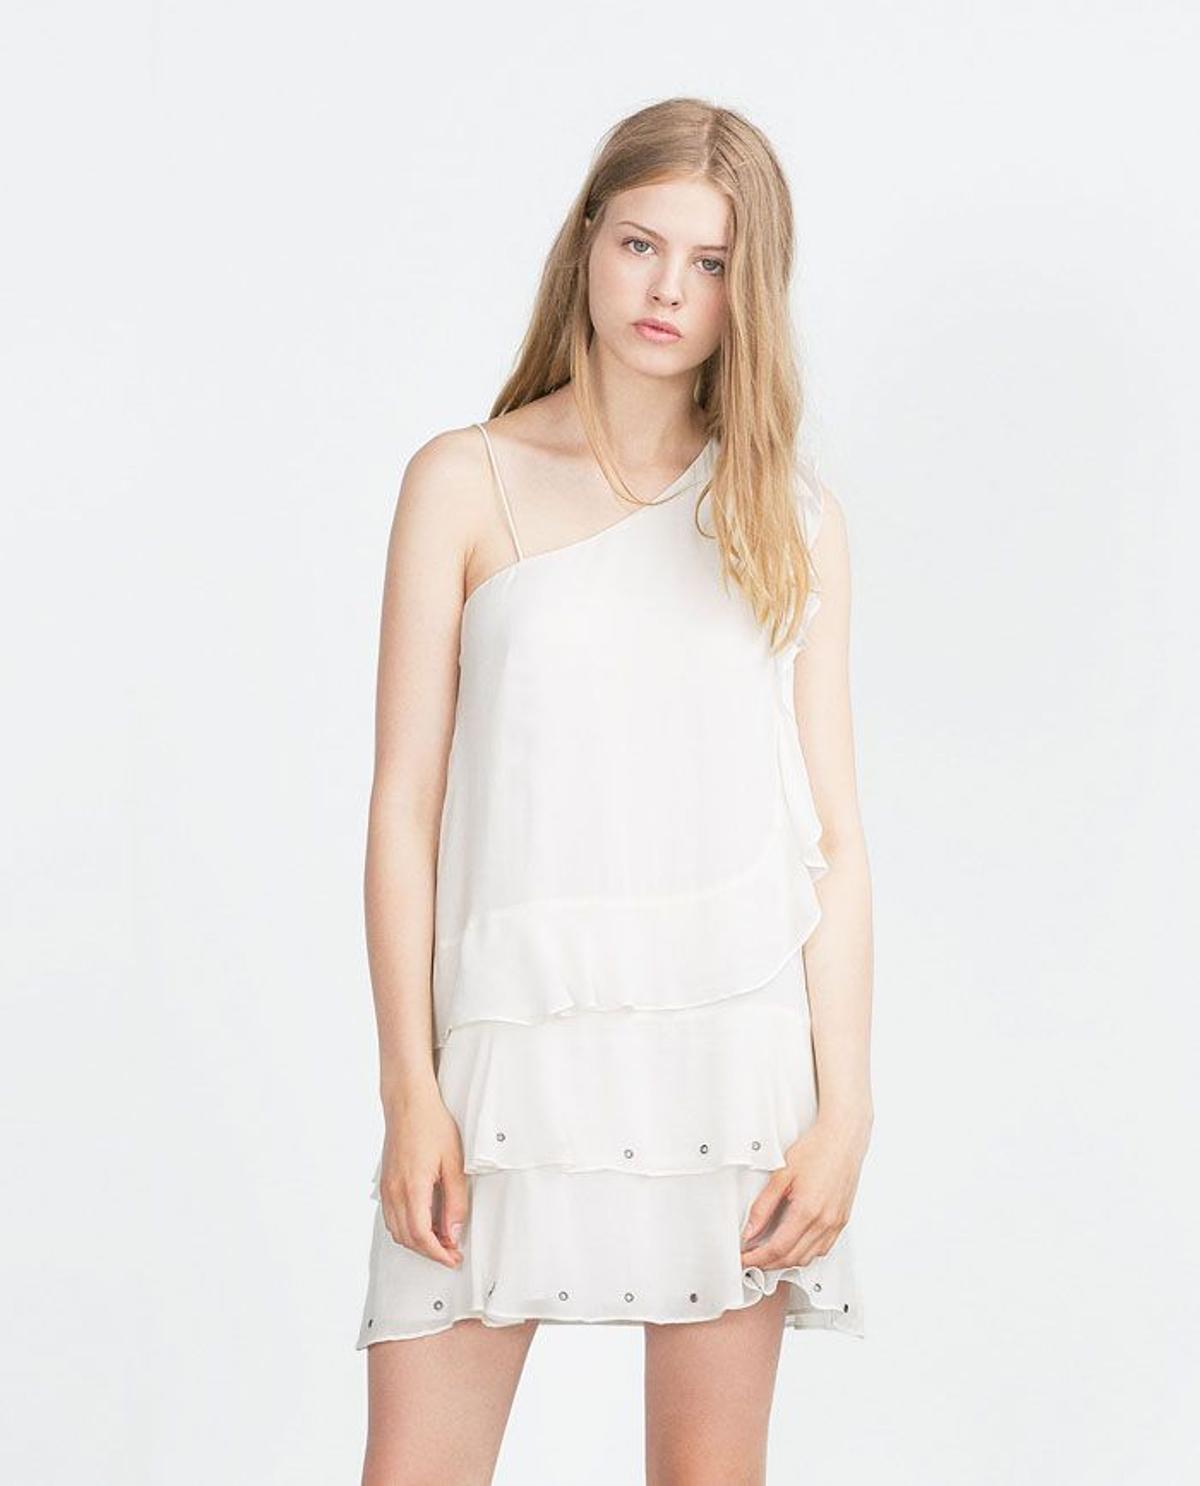 Vestido blanco asimétrico, Zara